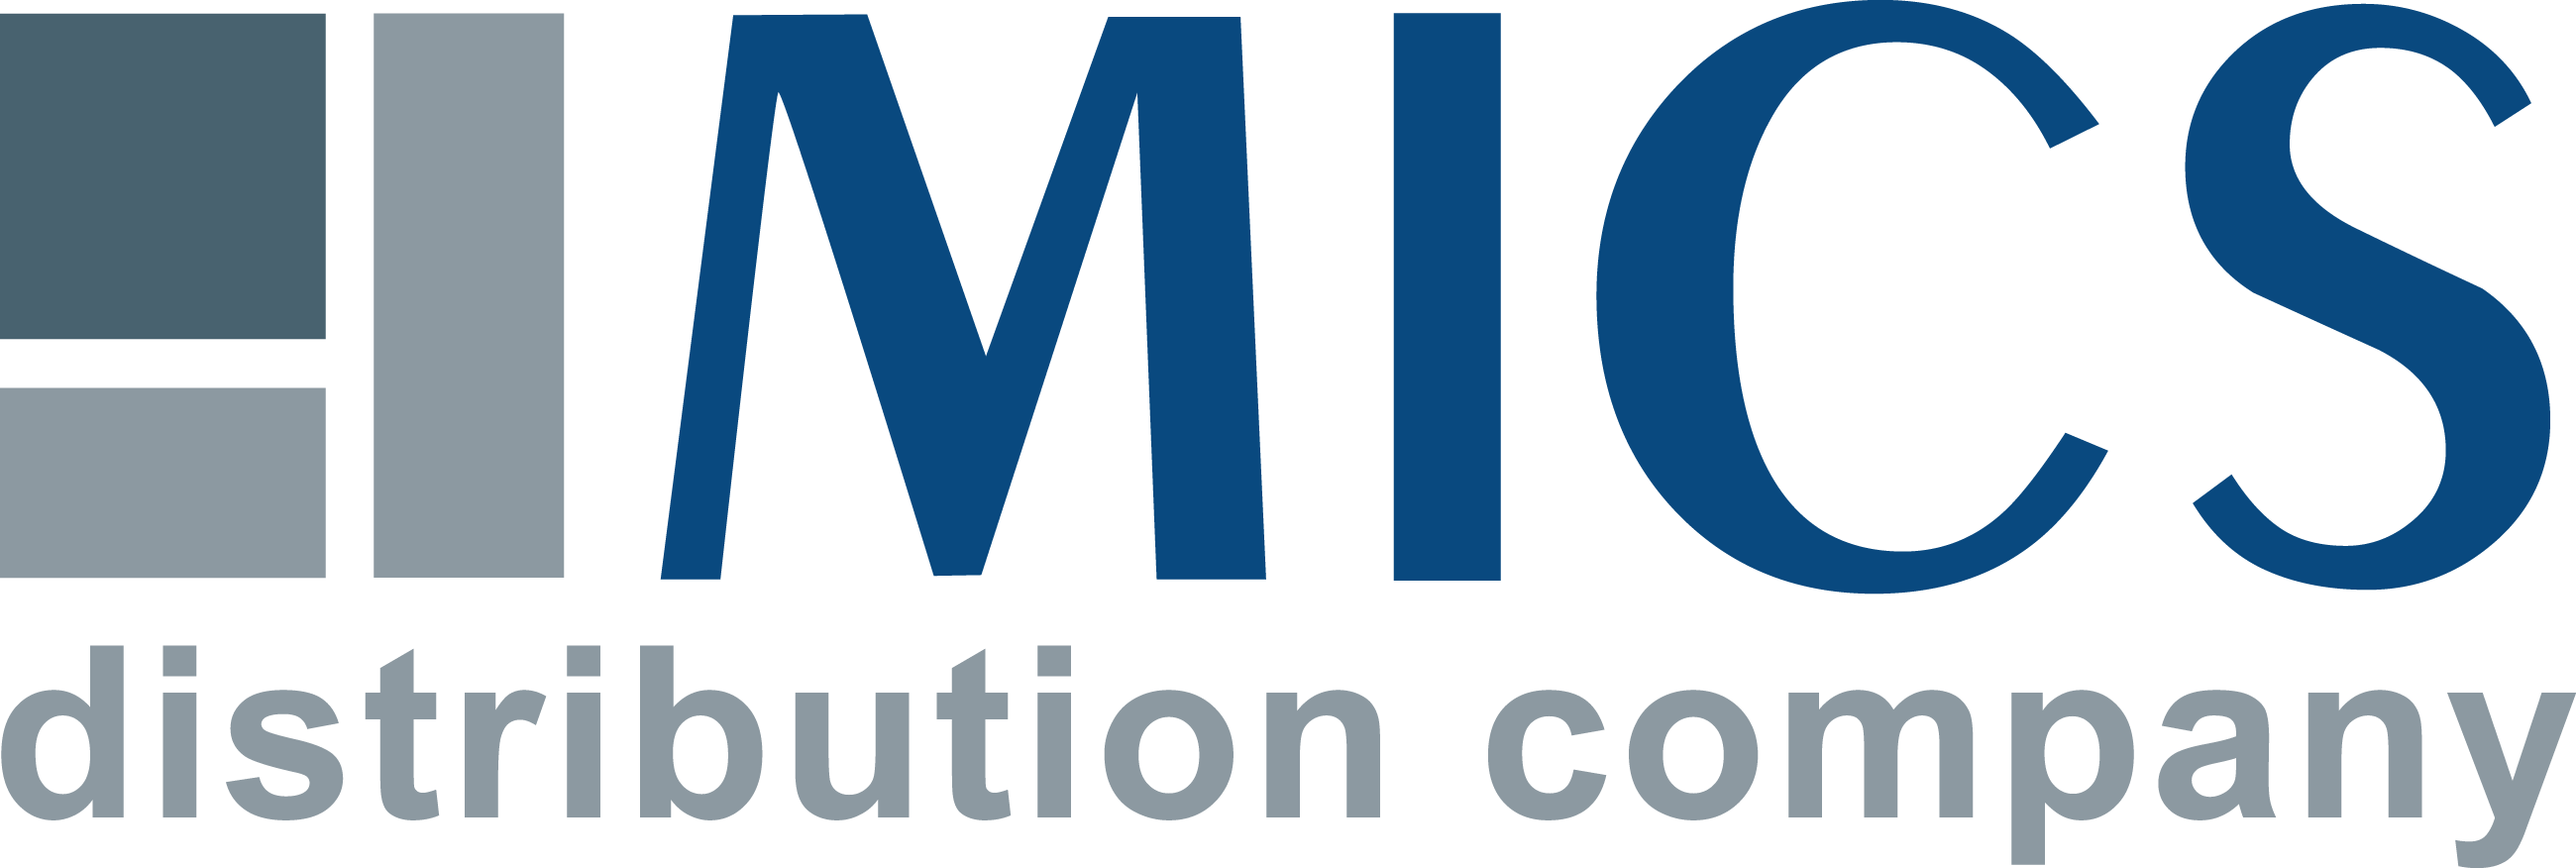 Distribution companies. Mics логотип. Дистрибьюторская компания микс. Логотип компании дистрибьютора. Mics distribution Company logo.